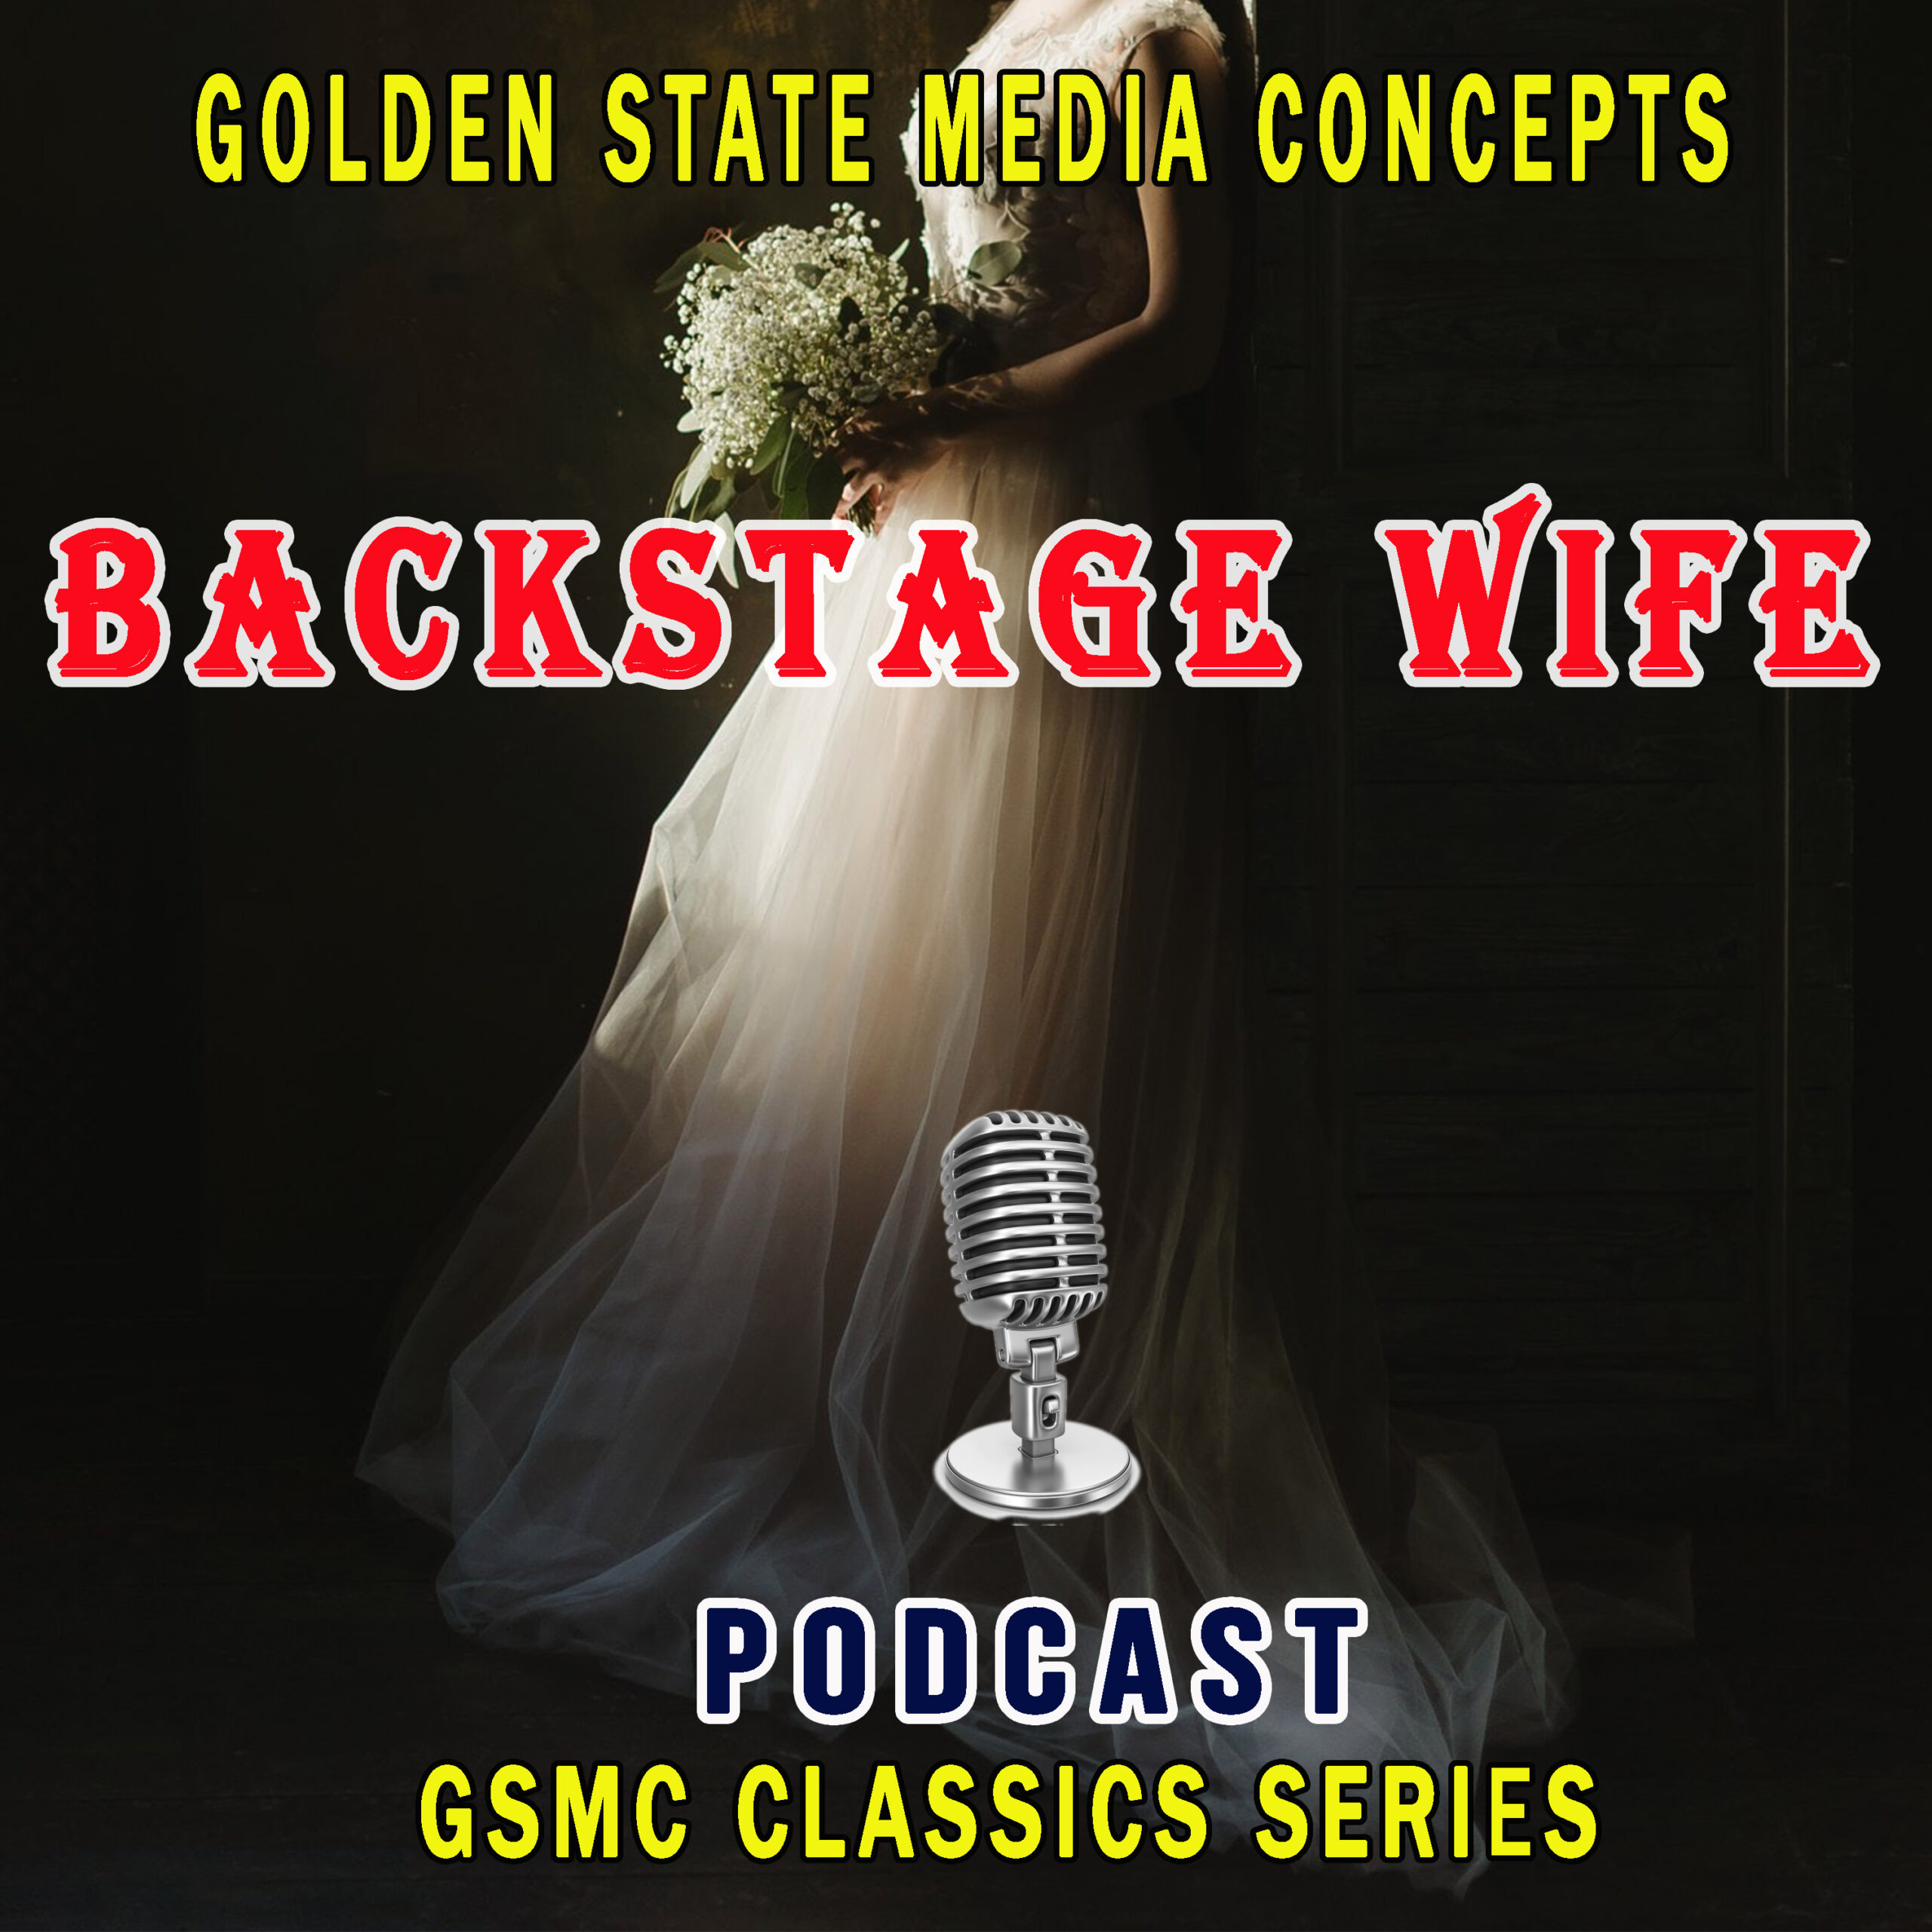 GSMC Classics: Backstage Wife